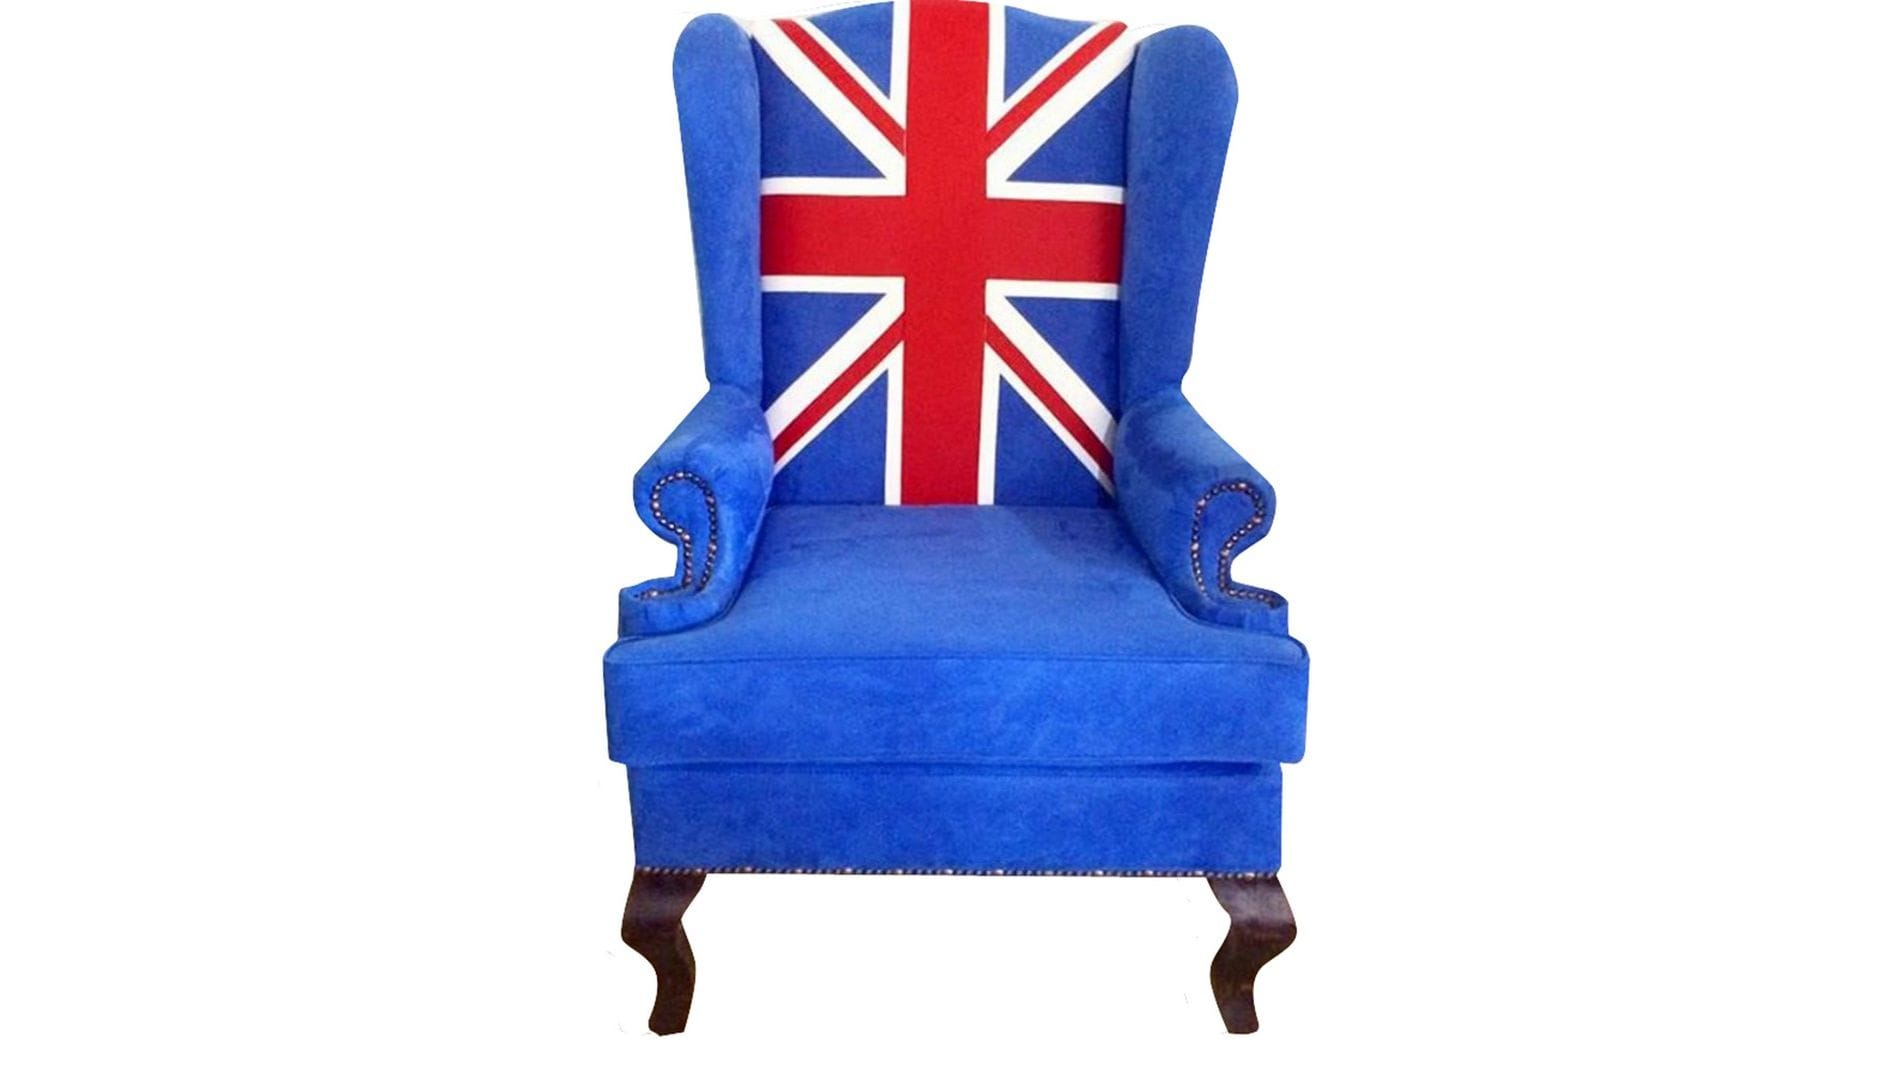 Каминное кресло Union Jack classic